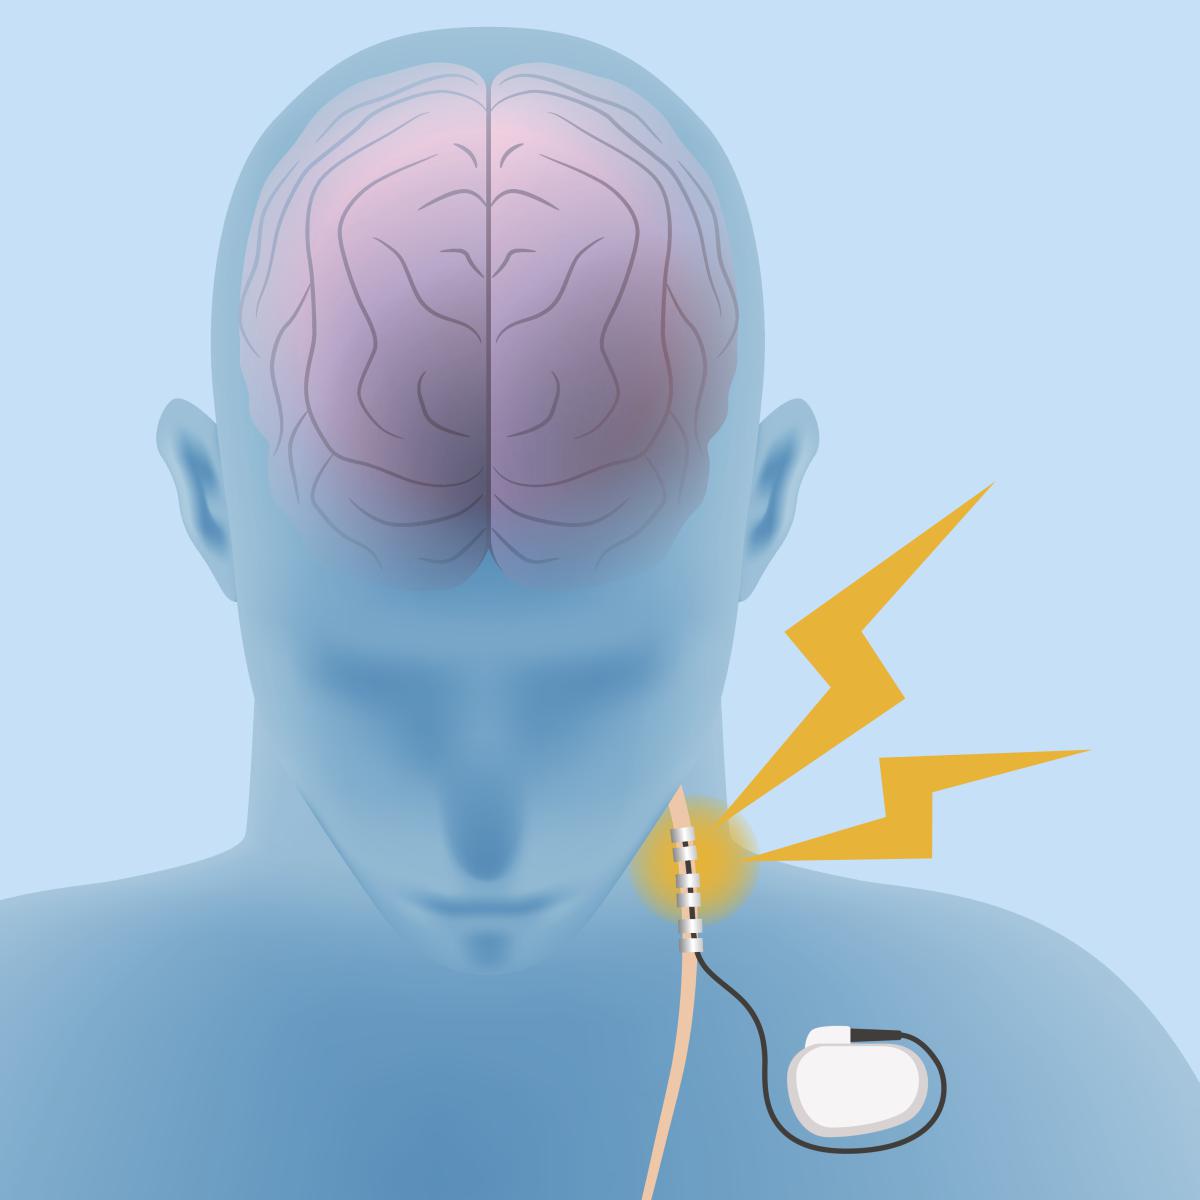 Man with neuromodulation device stimulating nerve